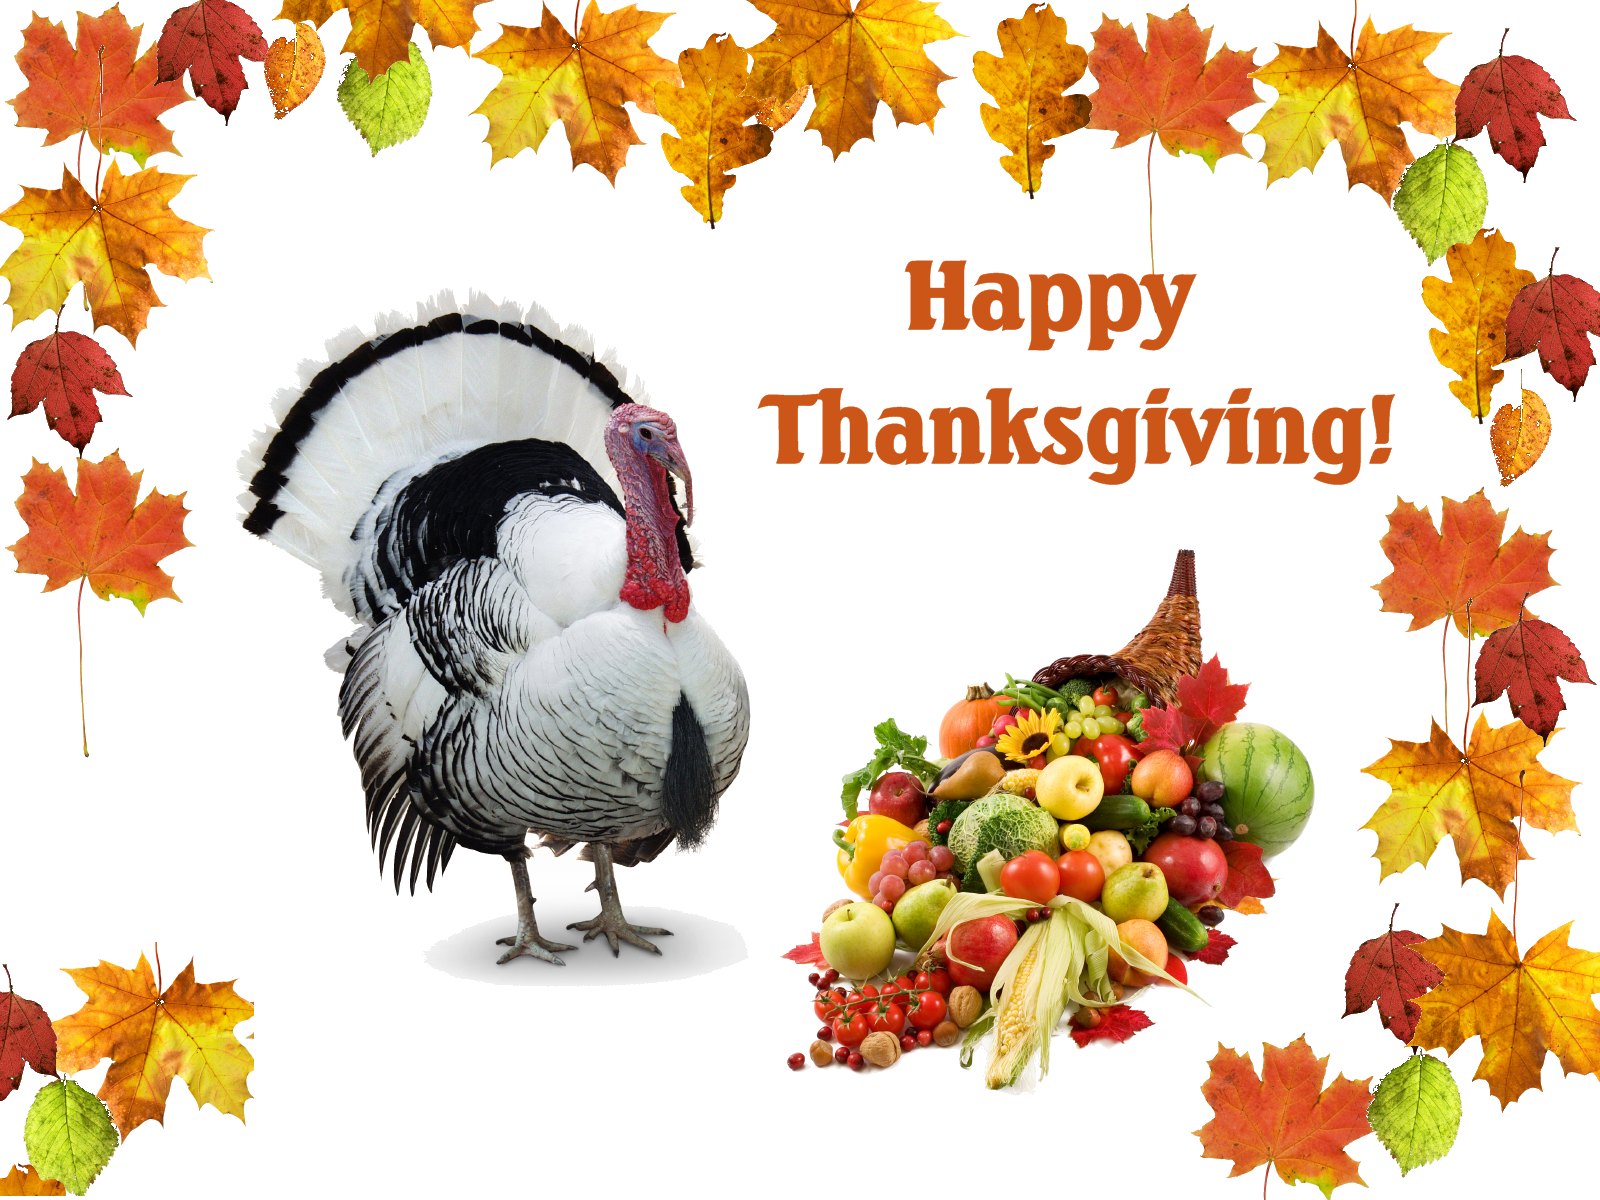 Happy Thanksgiving Wallpaper - WallpaperSafari.